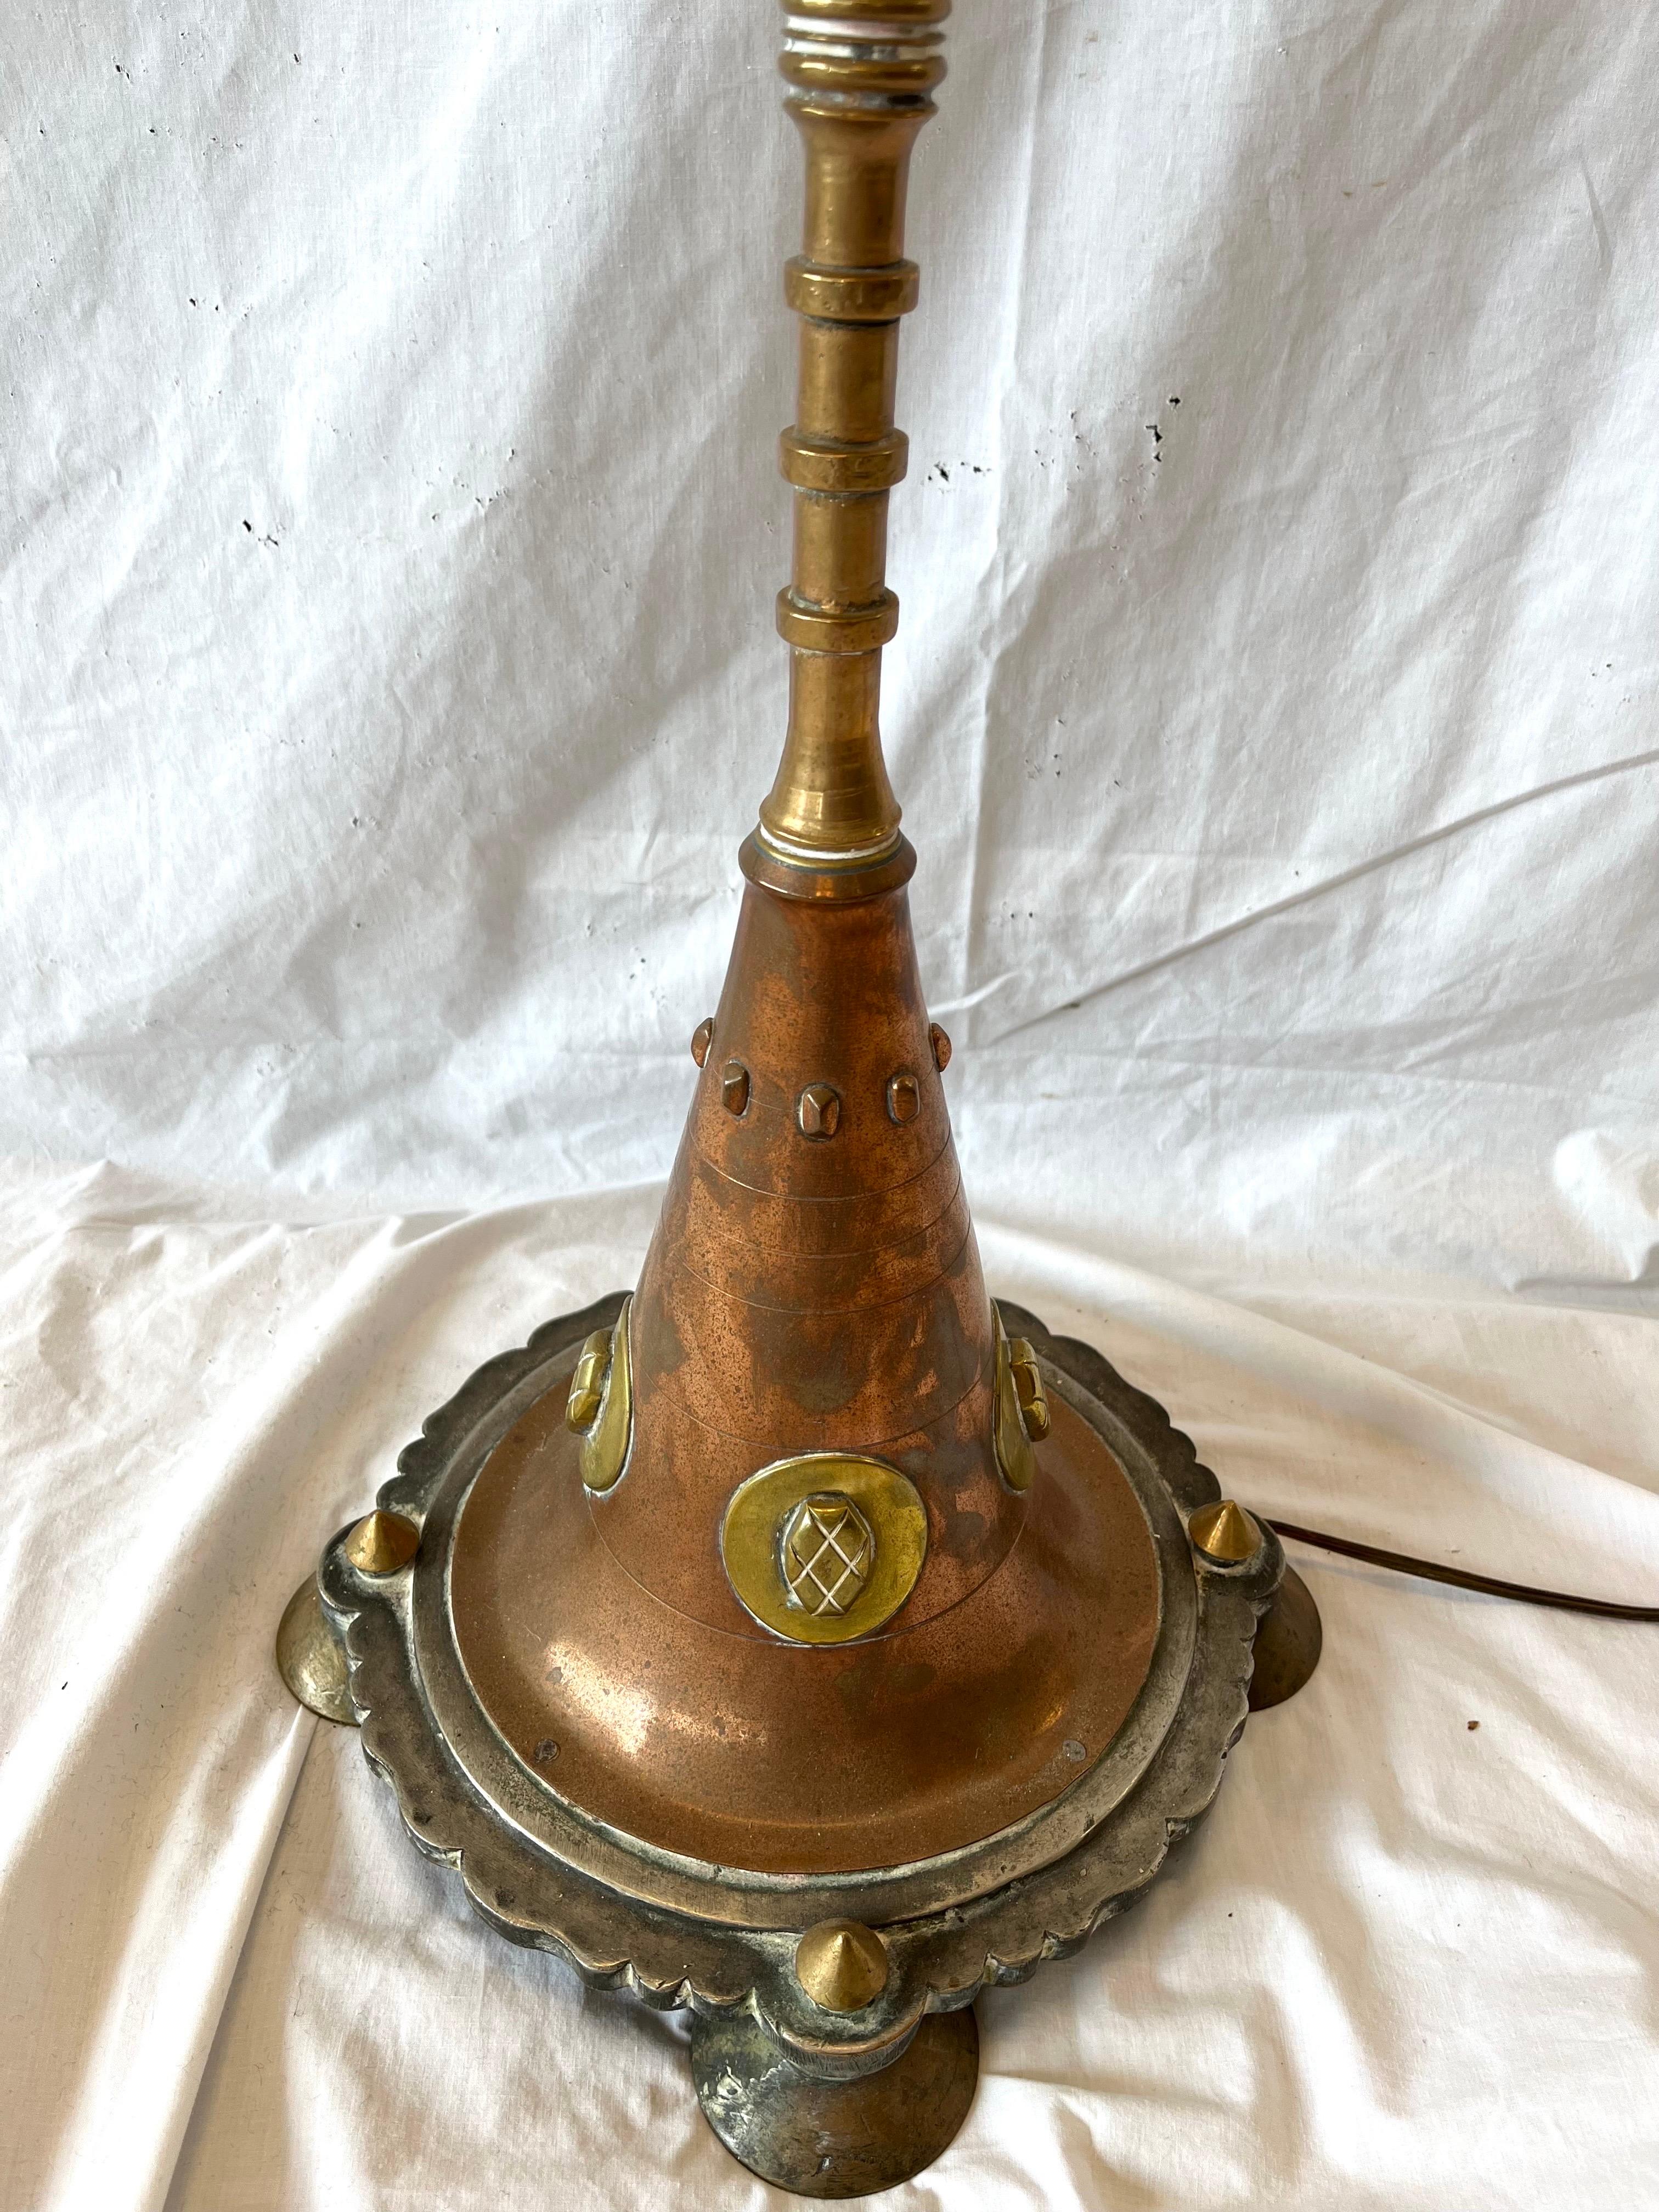 Cuivre Antique Copper Brass Mixed Metal Ornate Moorish Style Hand Crafted Floor Lamp (lampe de sol de style mauresque) en vente